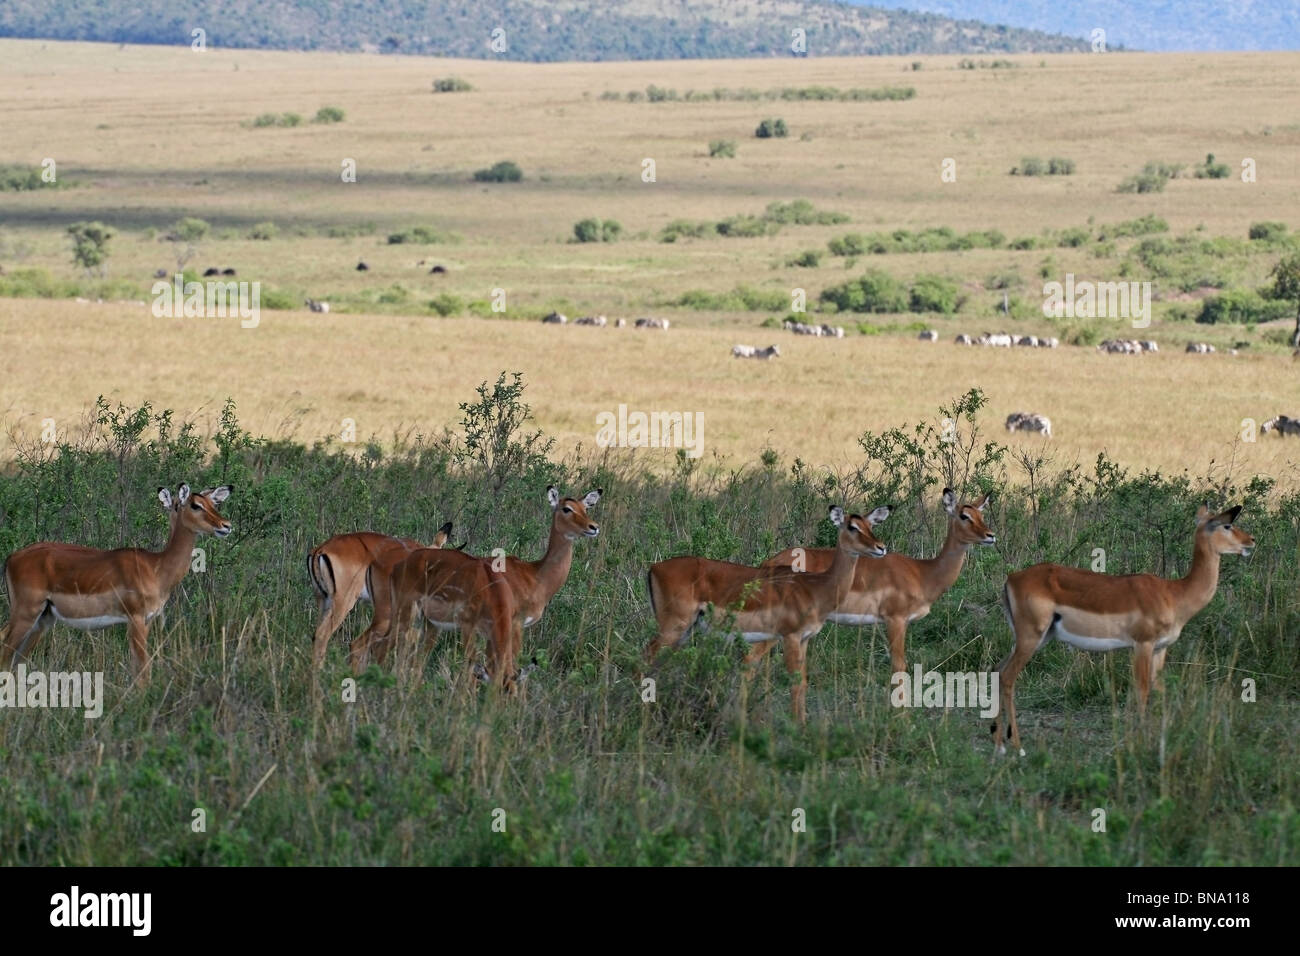 A herd of Alert Impala deers standing in Masai Mara National Reserve, Kenya, Africa Stock Photo